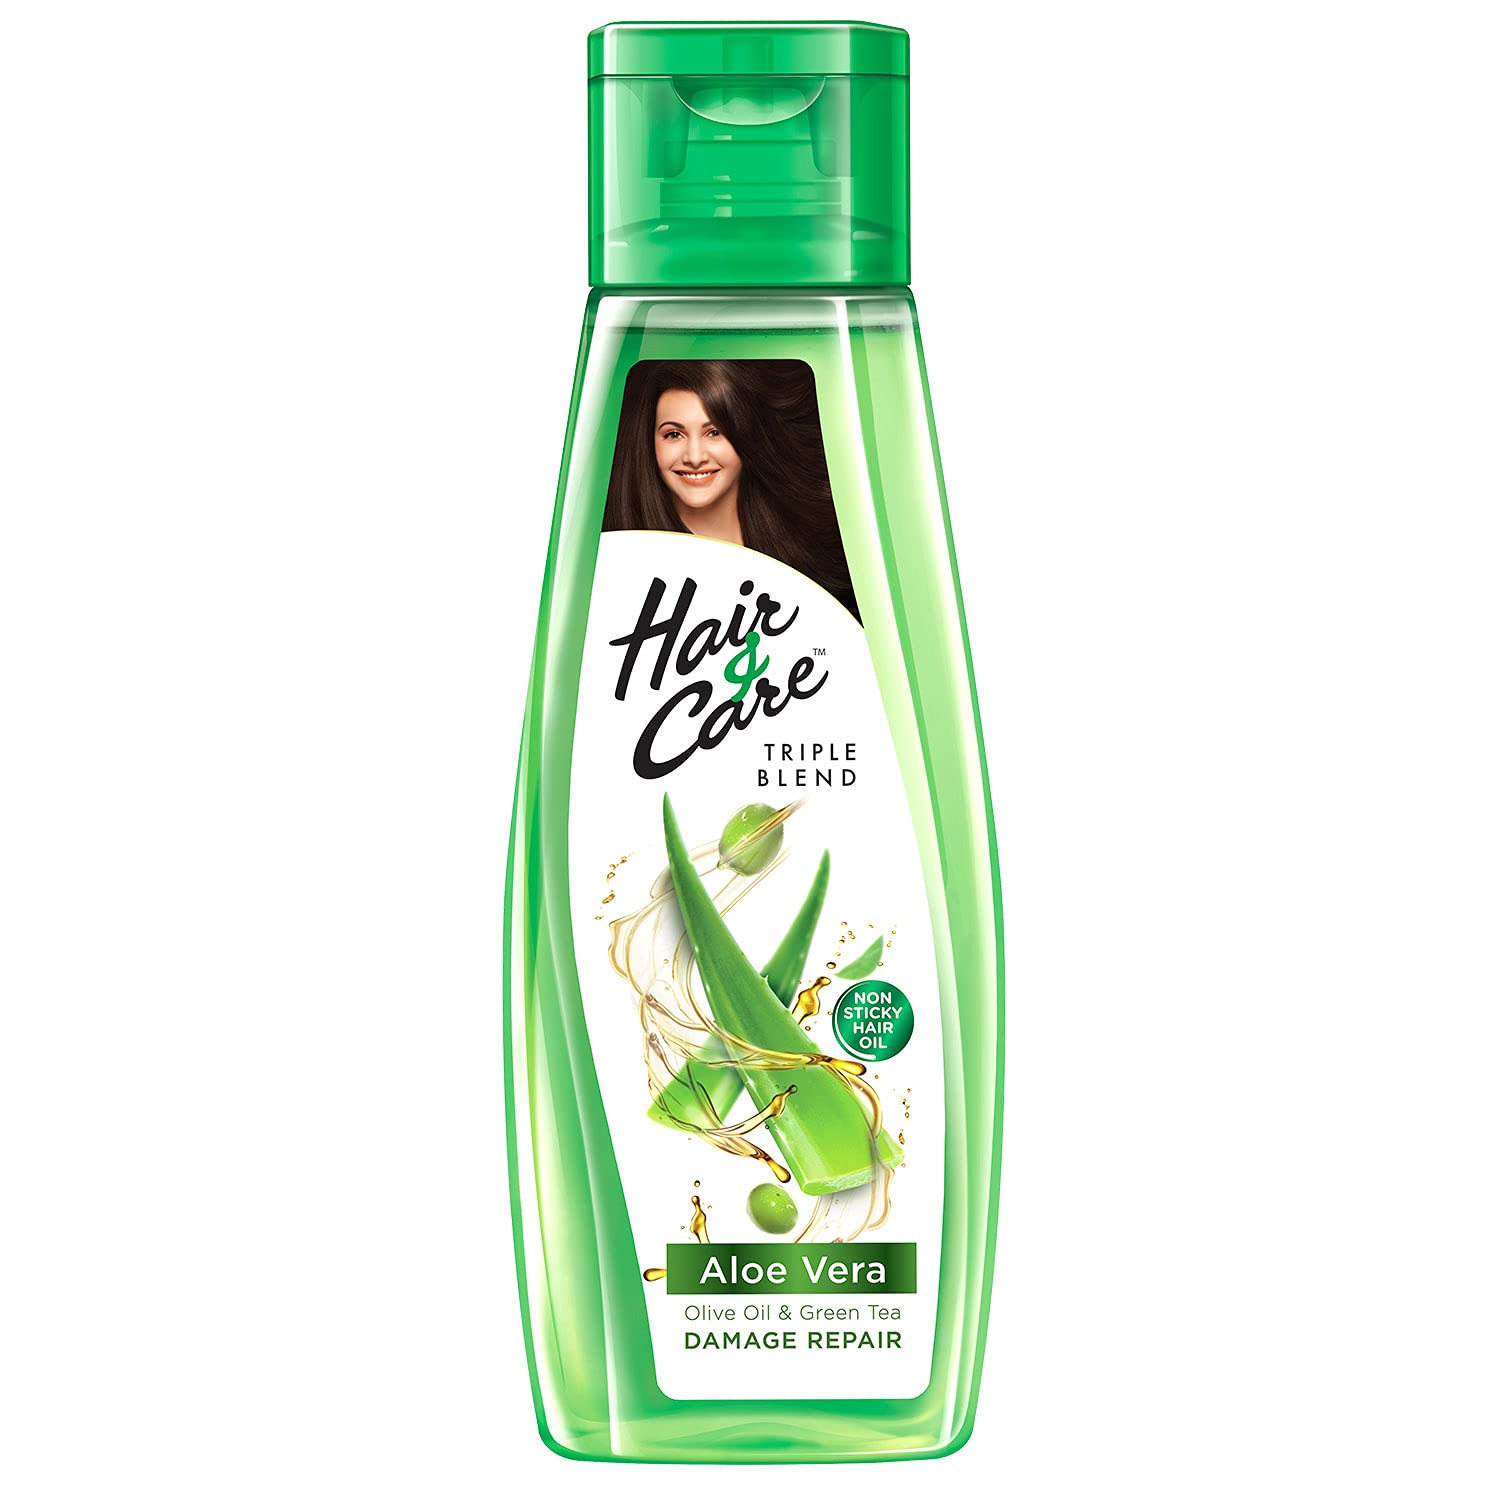 Hair & Care with Aloe Vera, Olive Oil & Green Tea Damage Repair Non-Sticky Hair Oil, 300 ml